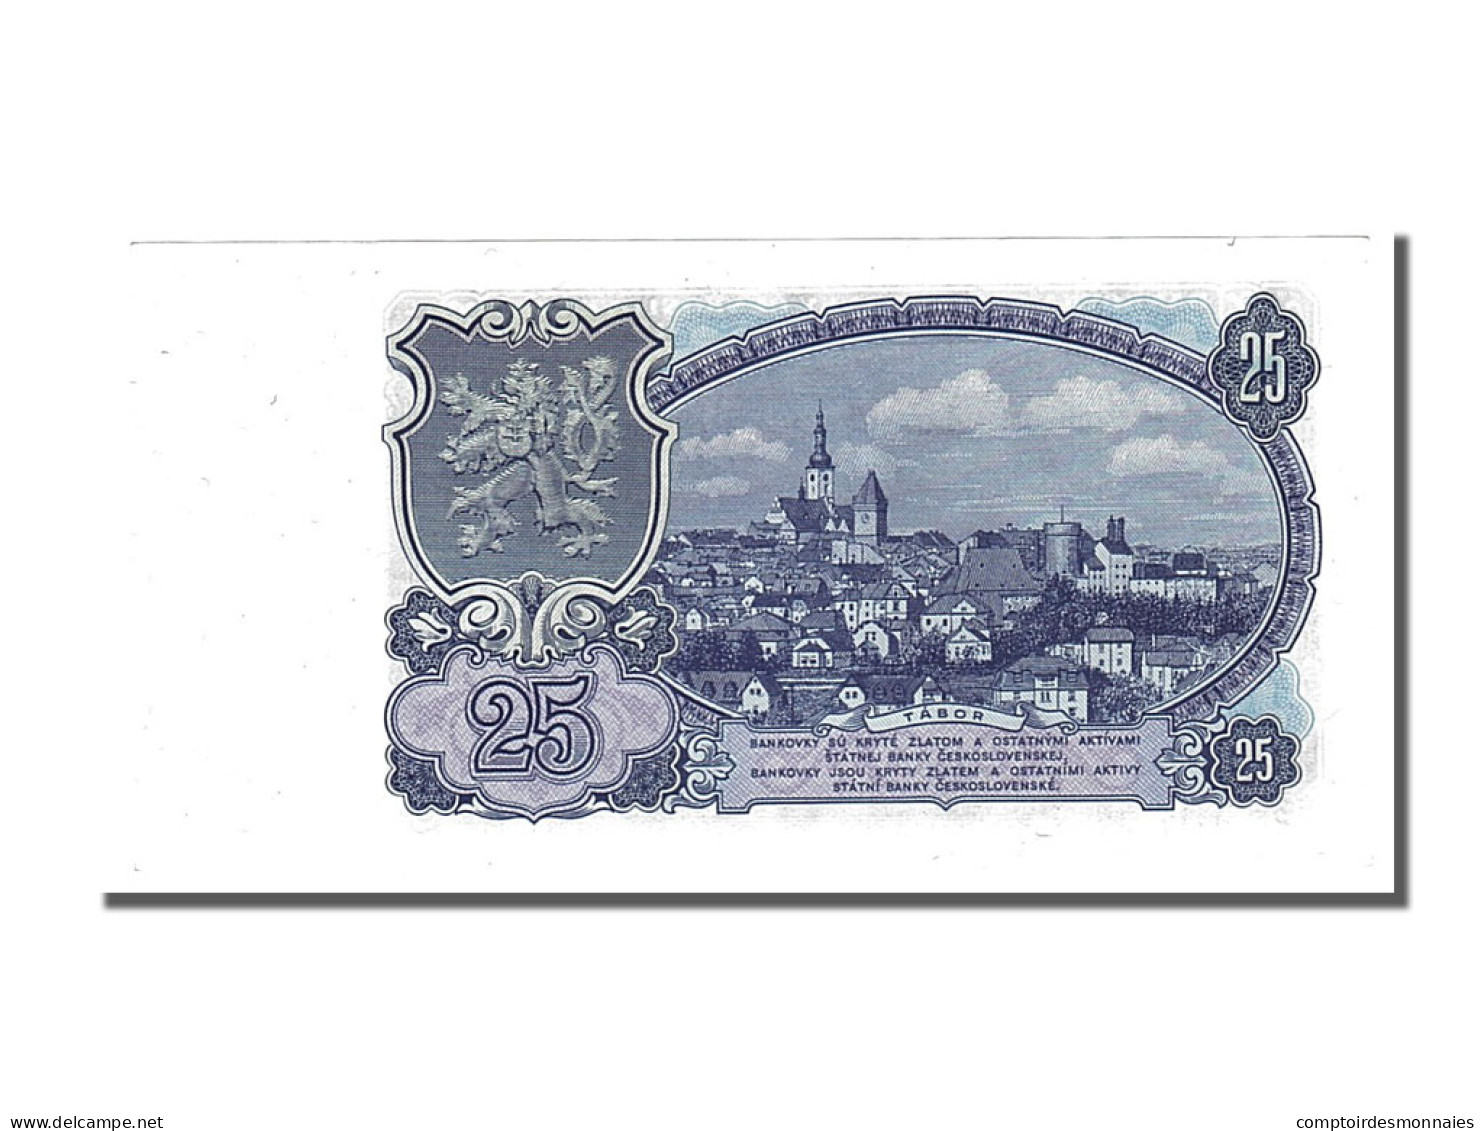 Billet, Tchécoslovaquie, 25 Korun, 1953, NEUF - Tschechoslowakei